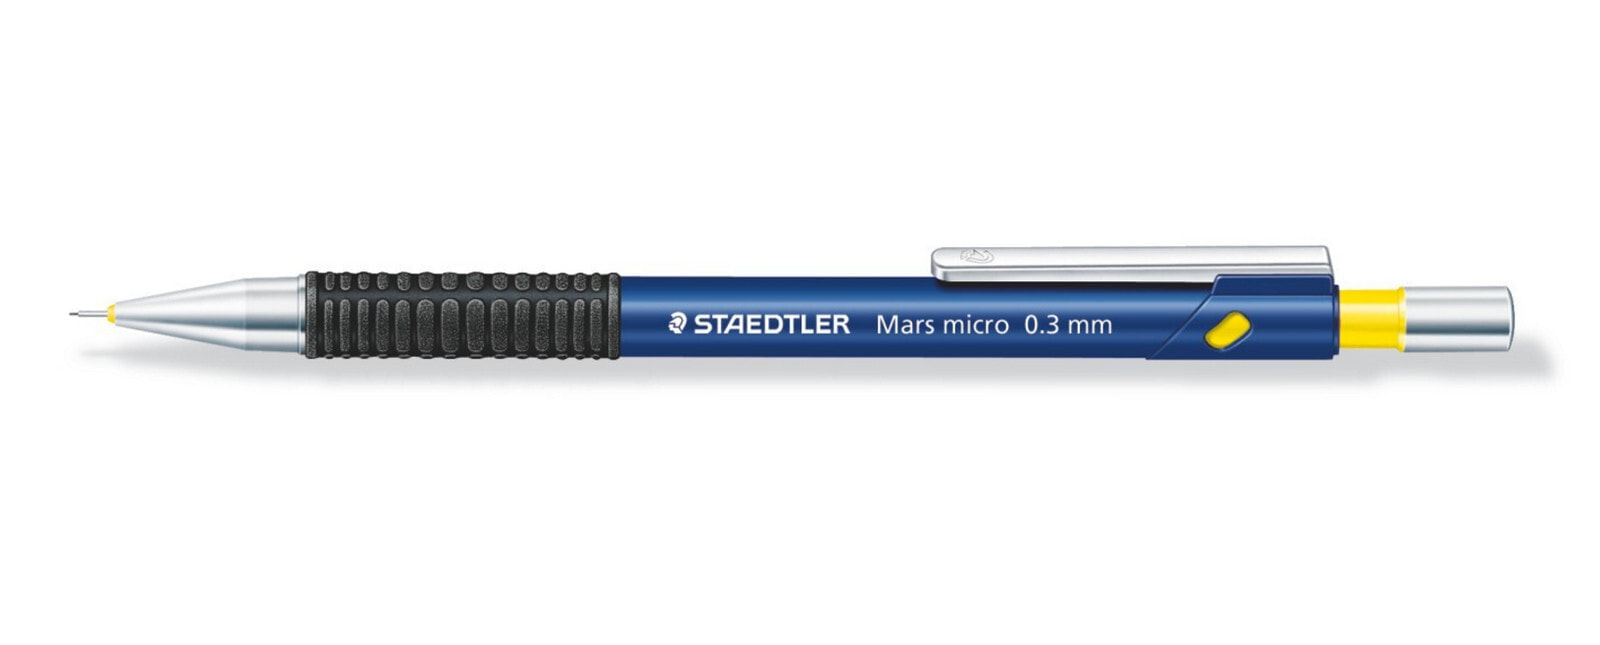 Staedtler Mars micro 775 0.3mm механический карандаш B 0,3 mm 1 шт 775 03